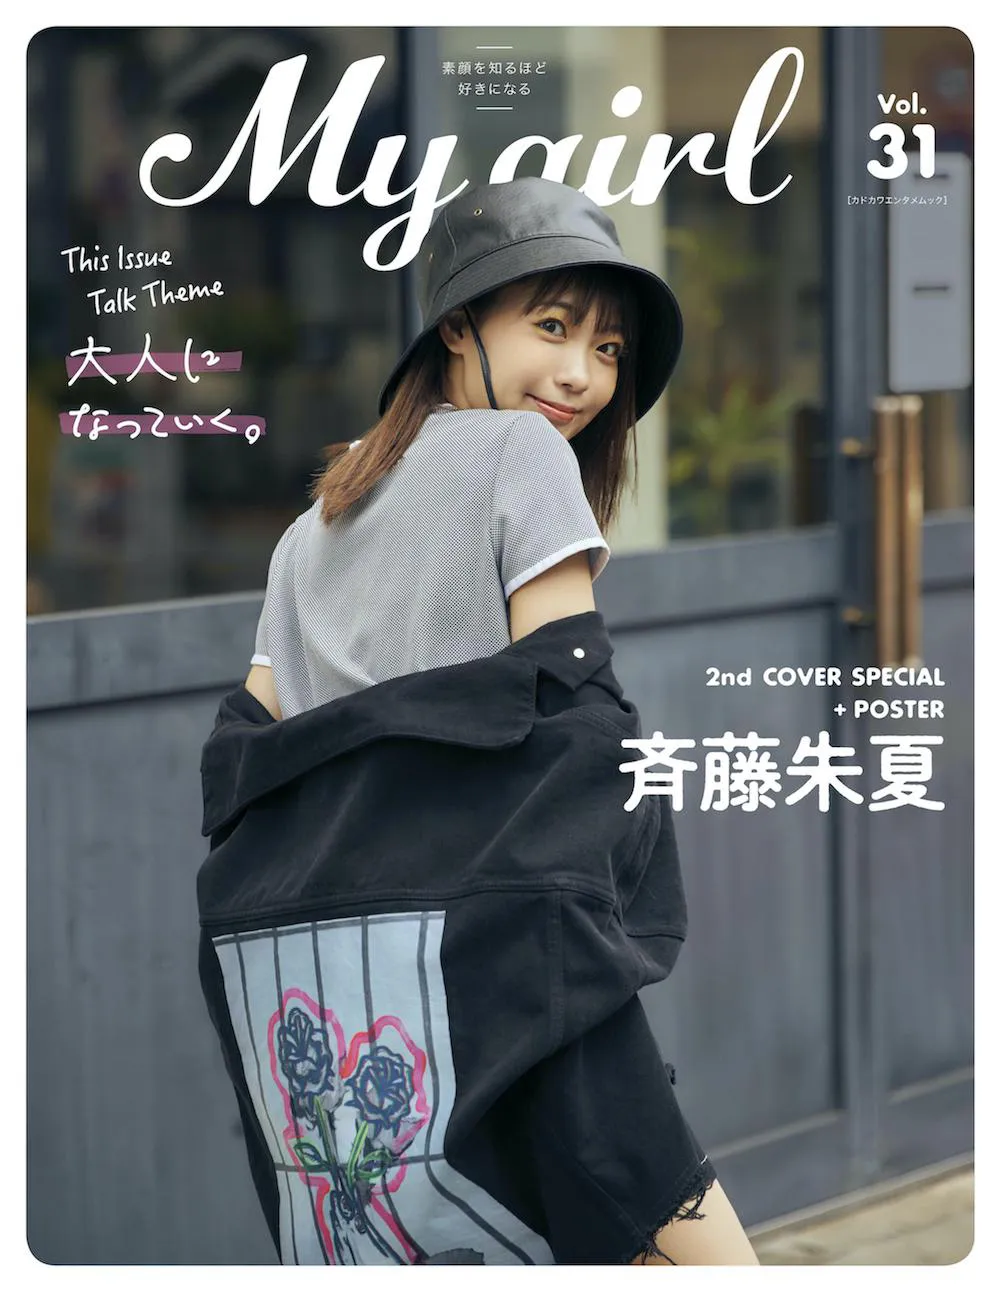 「My Girl vol.31」2nd Cover（裏表紙）に登場する声優・斉藤朱夏